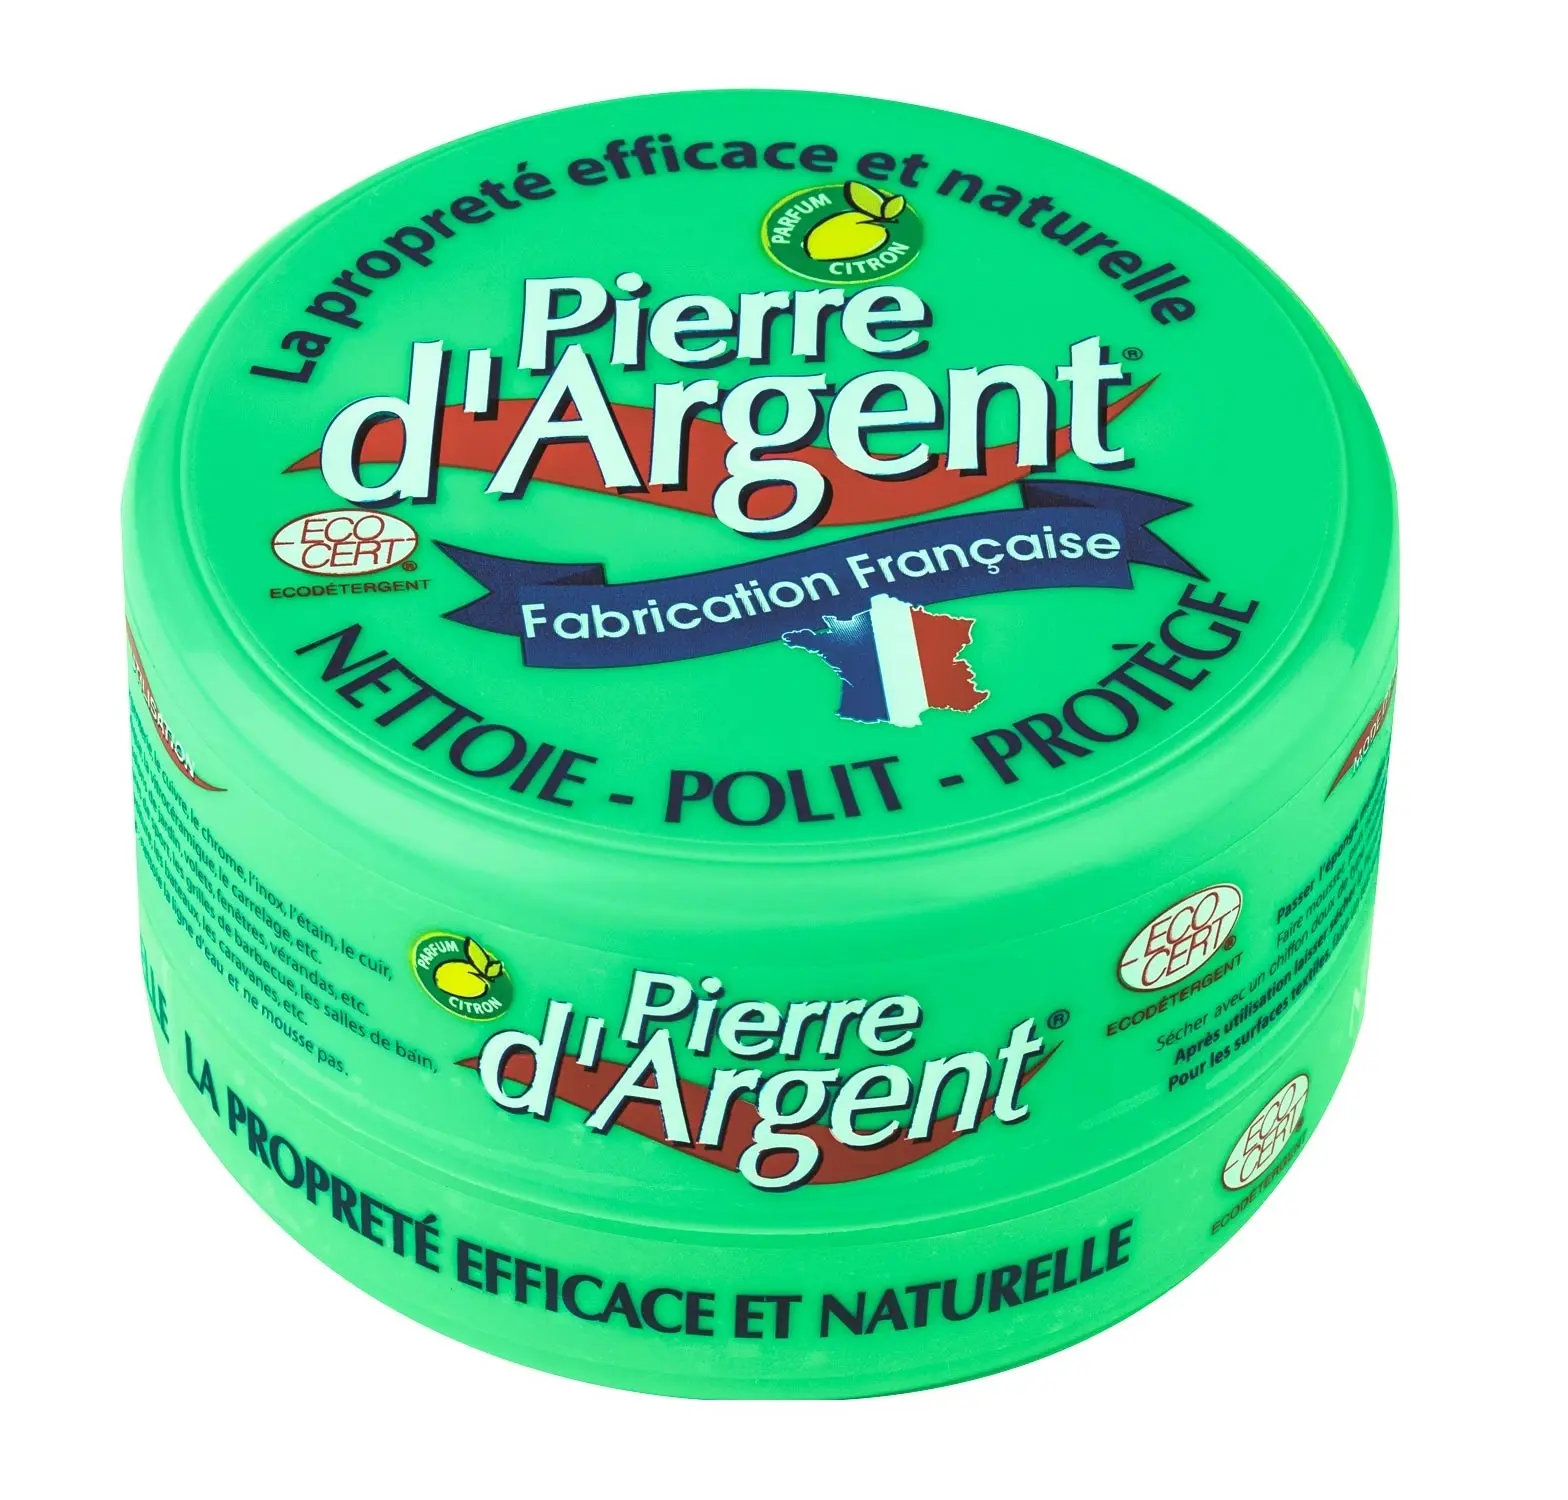 Pierre D'argent limone fragranza detergente ECOCERT detergenti all'ingrosso in vendita ecologico naturale